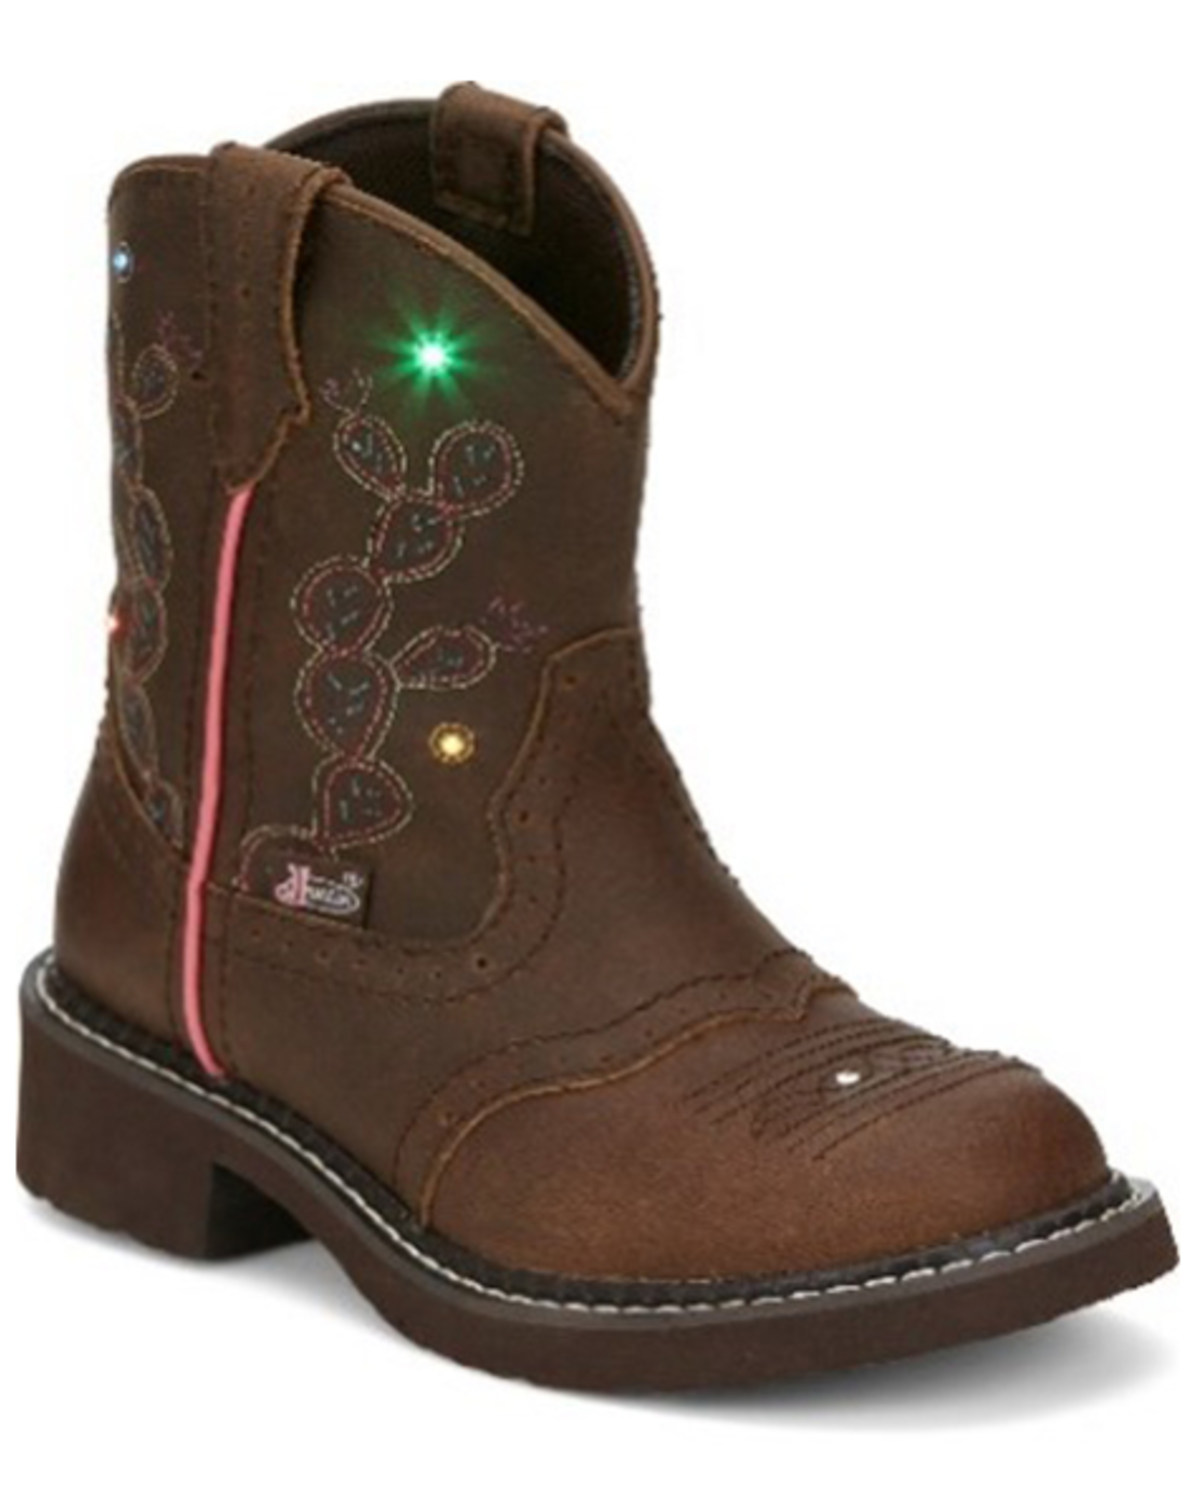 Justin Girls' Glitzi Western Boots - Round Toe